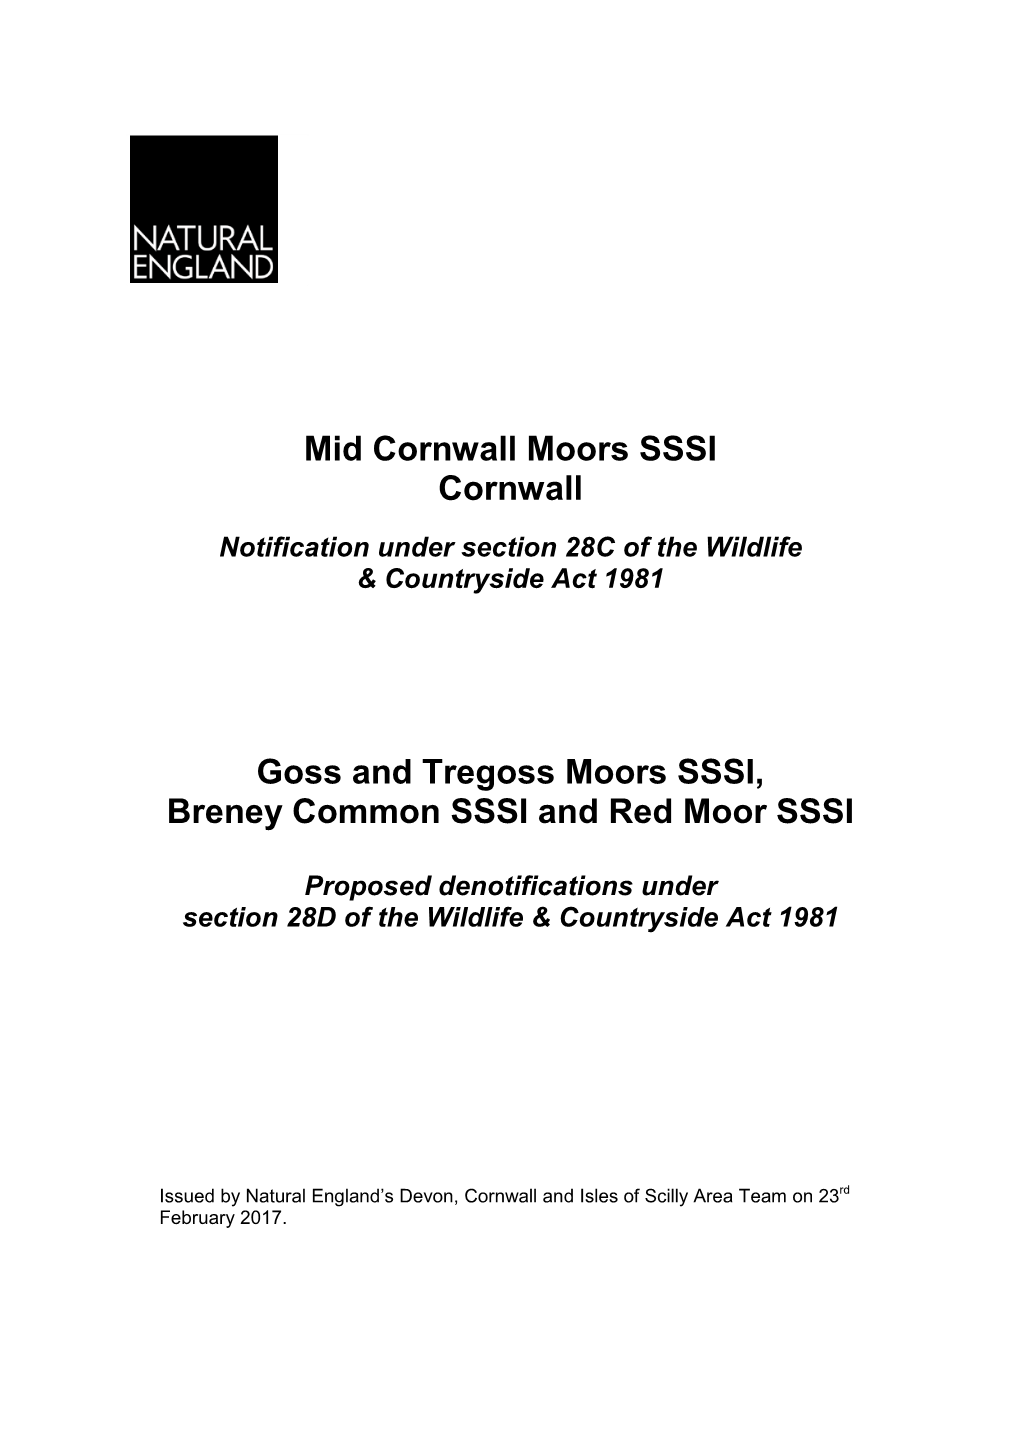 Mid Cornwall Moors SSSI Notification Document